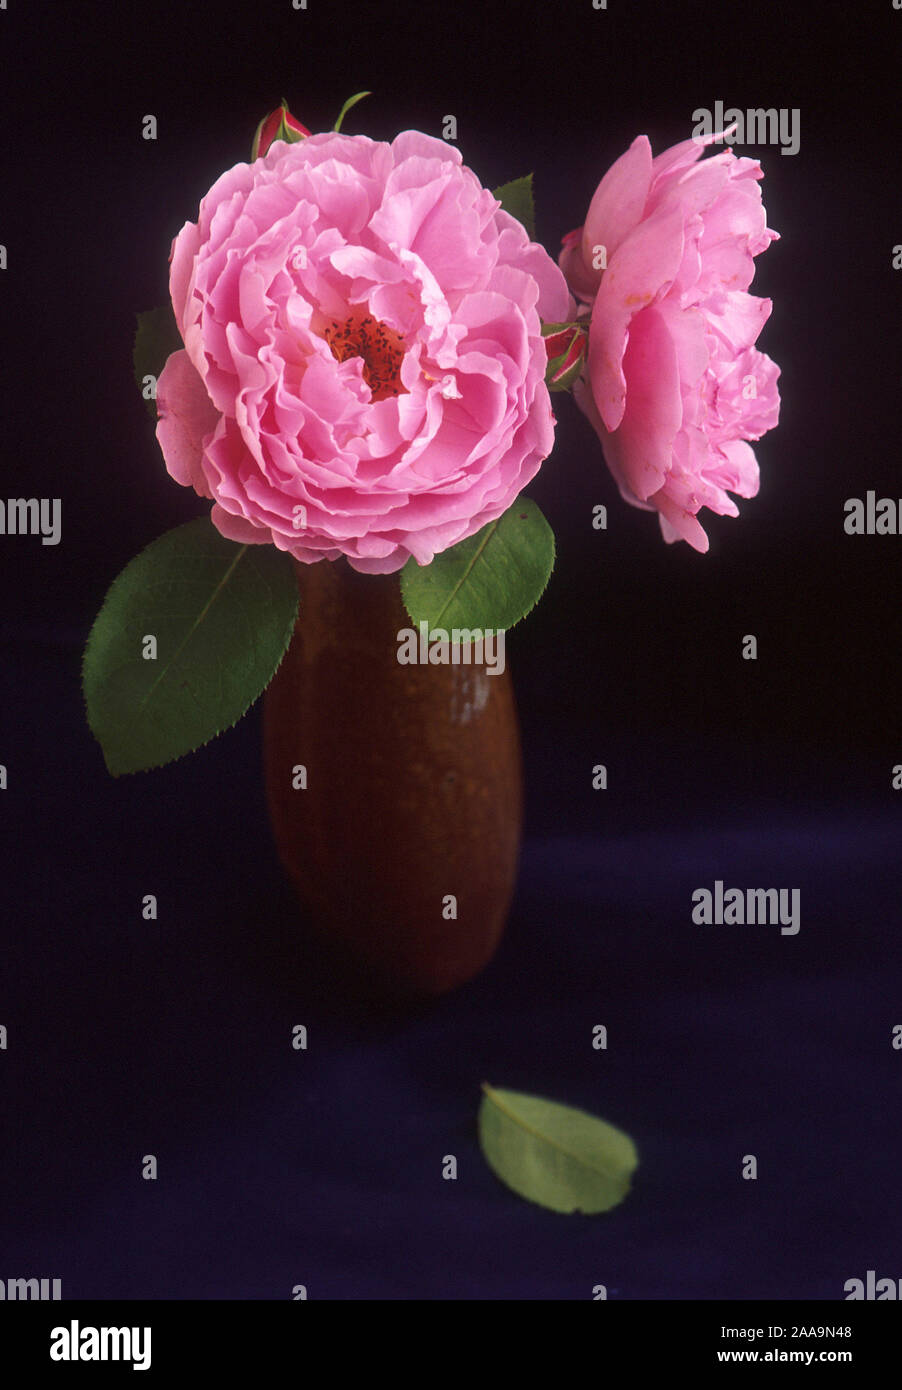 The Sarah van Fleet rose, developed by geneticist Walter van Fleet specifically for American gardens. Stock Photo